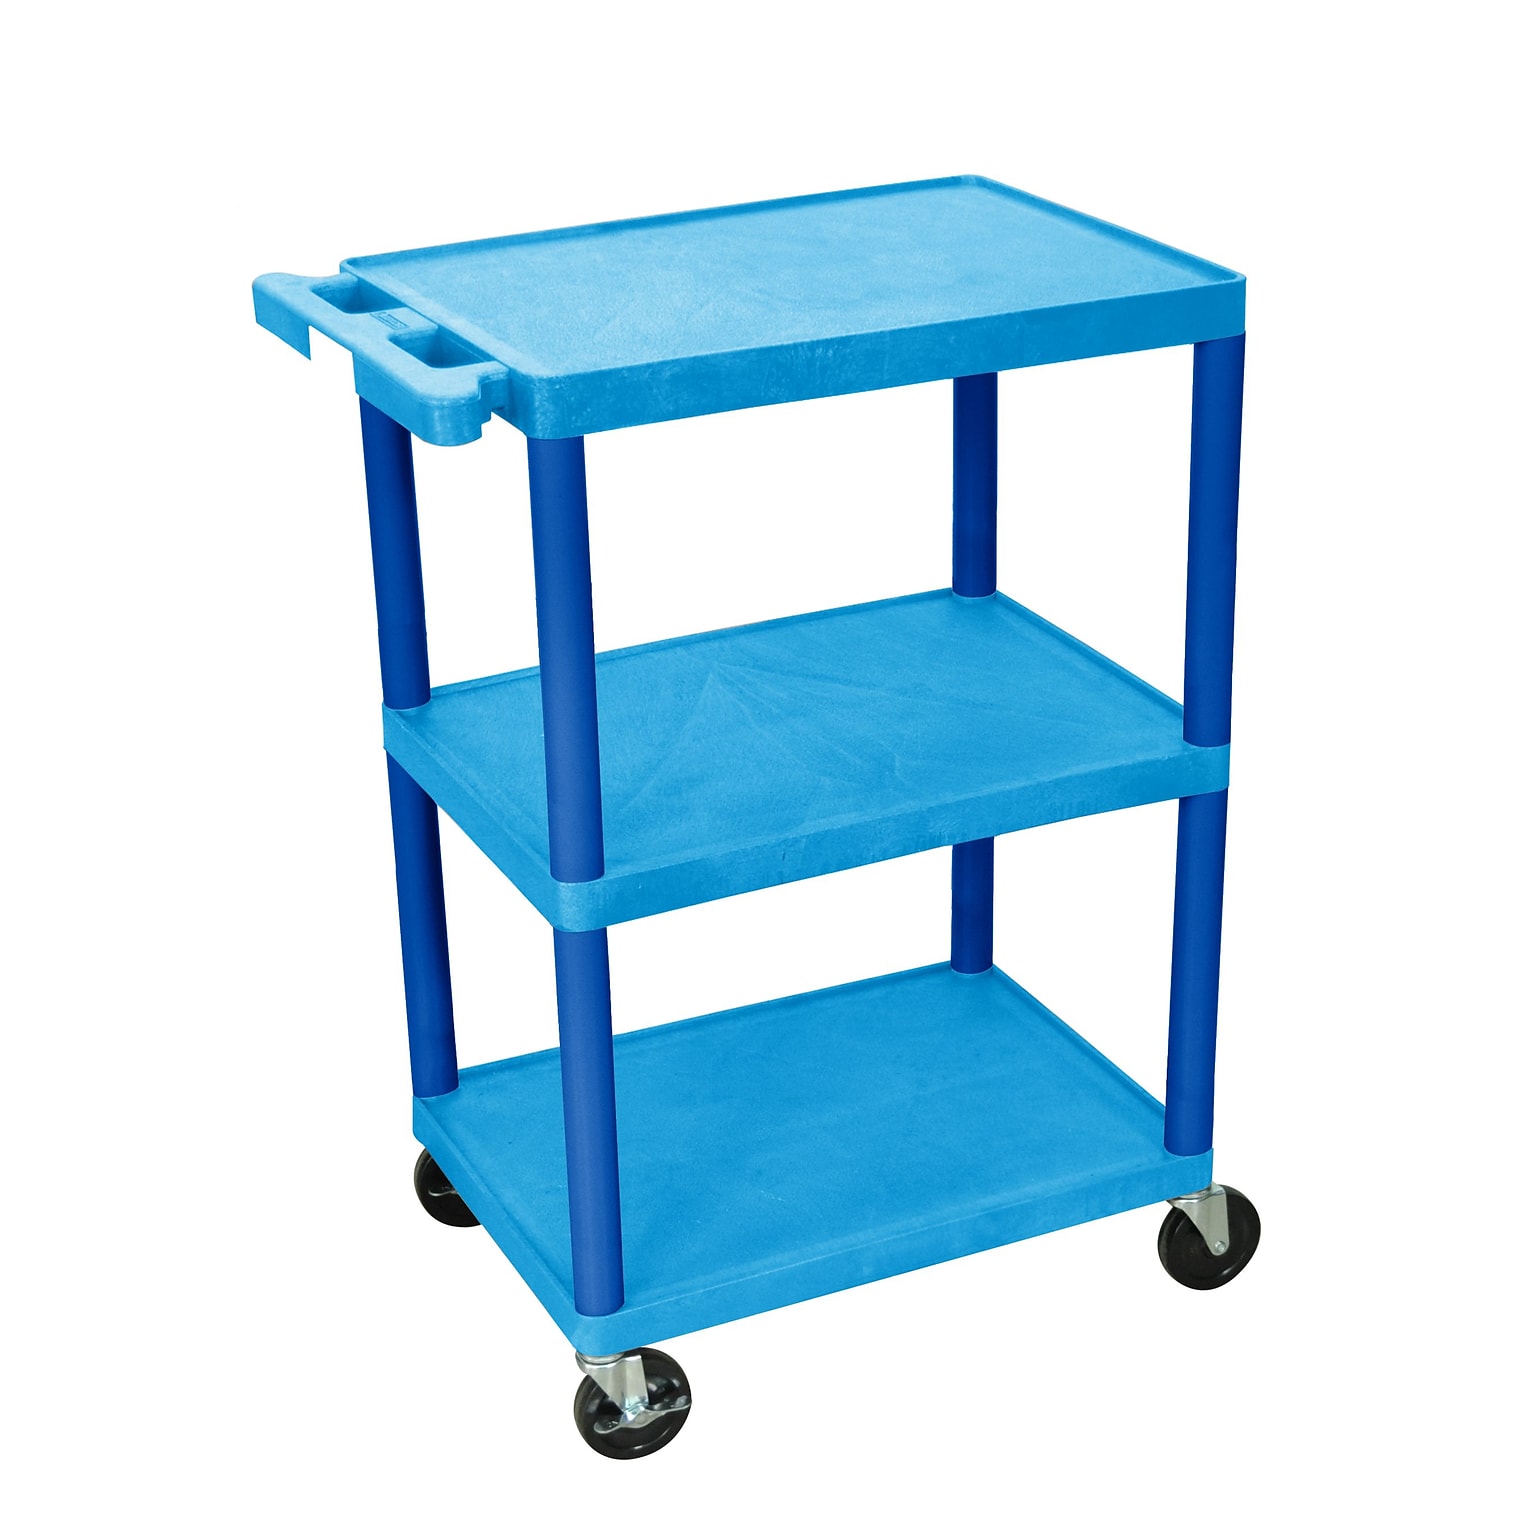 Luxor Structural Foam Plastic Three Shelf Utility Cart, Blue